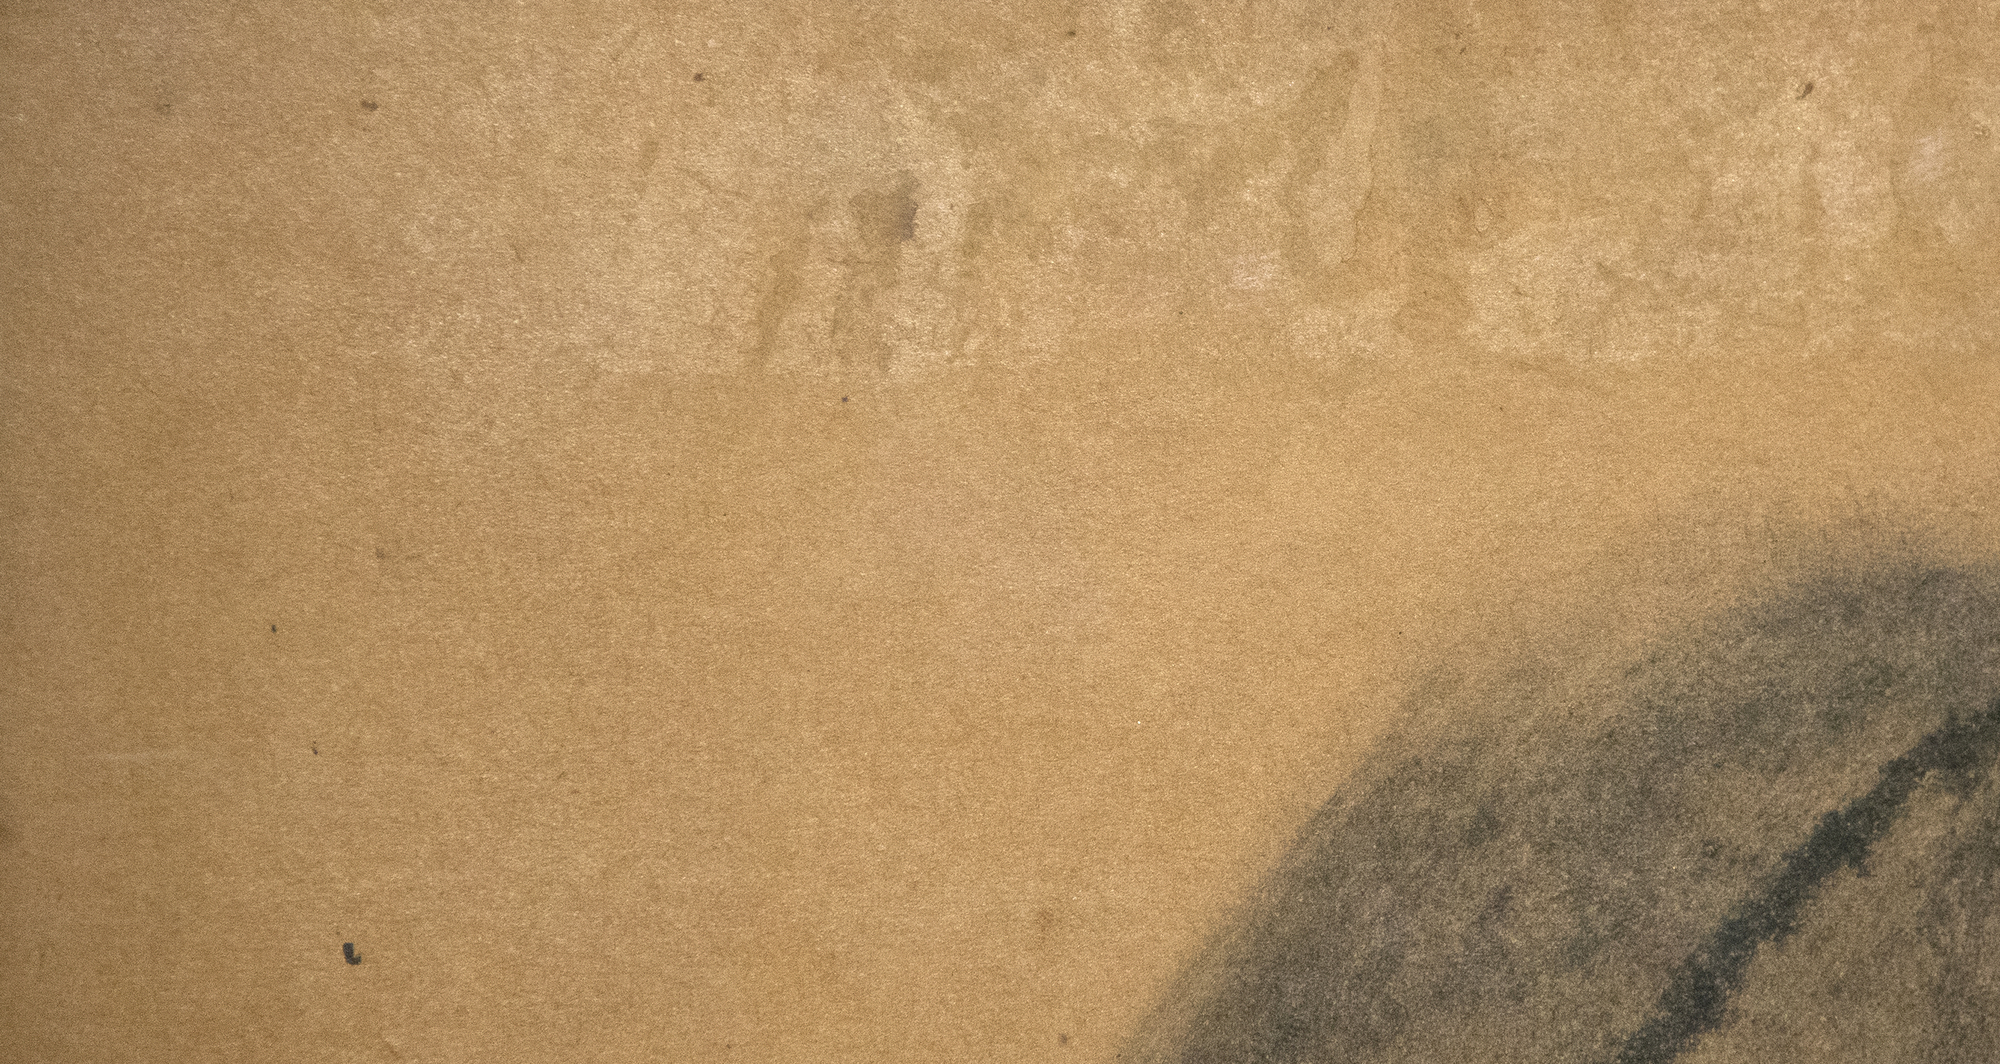 FERNANDO BOTERO - Autoretrato a la manera de Velázquez - sanguine et crayon sur carton - 60 1/2 x 47 1/2 in.